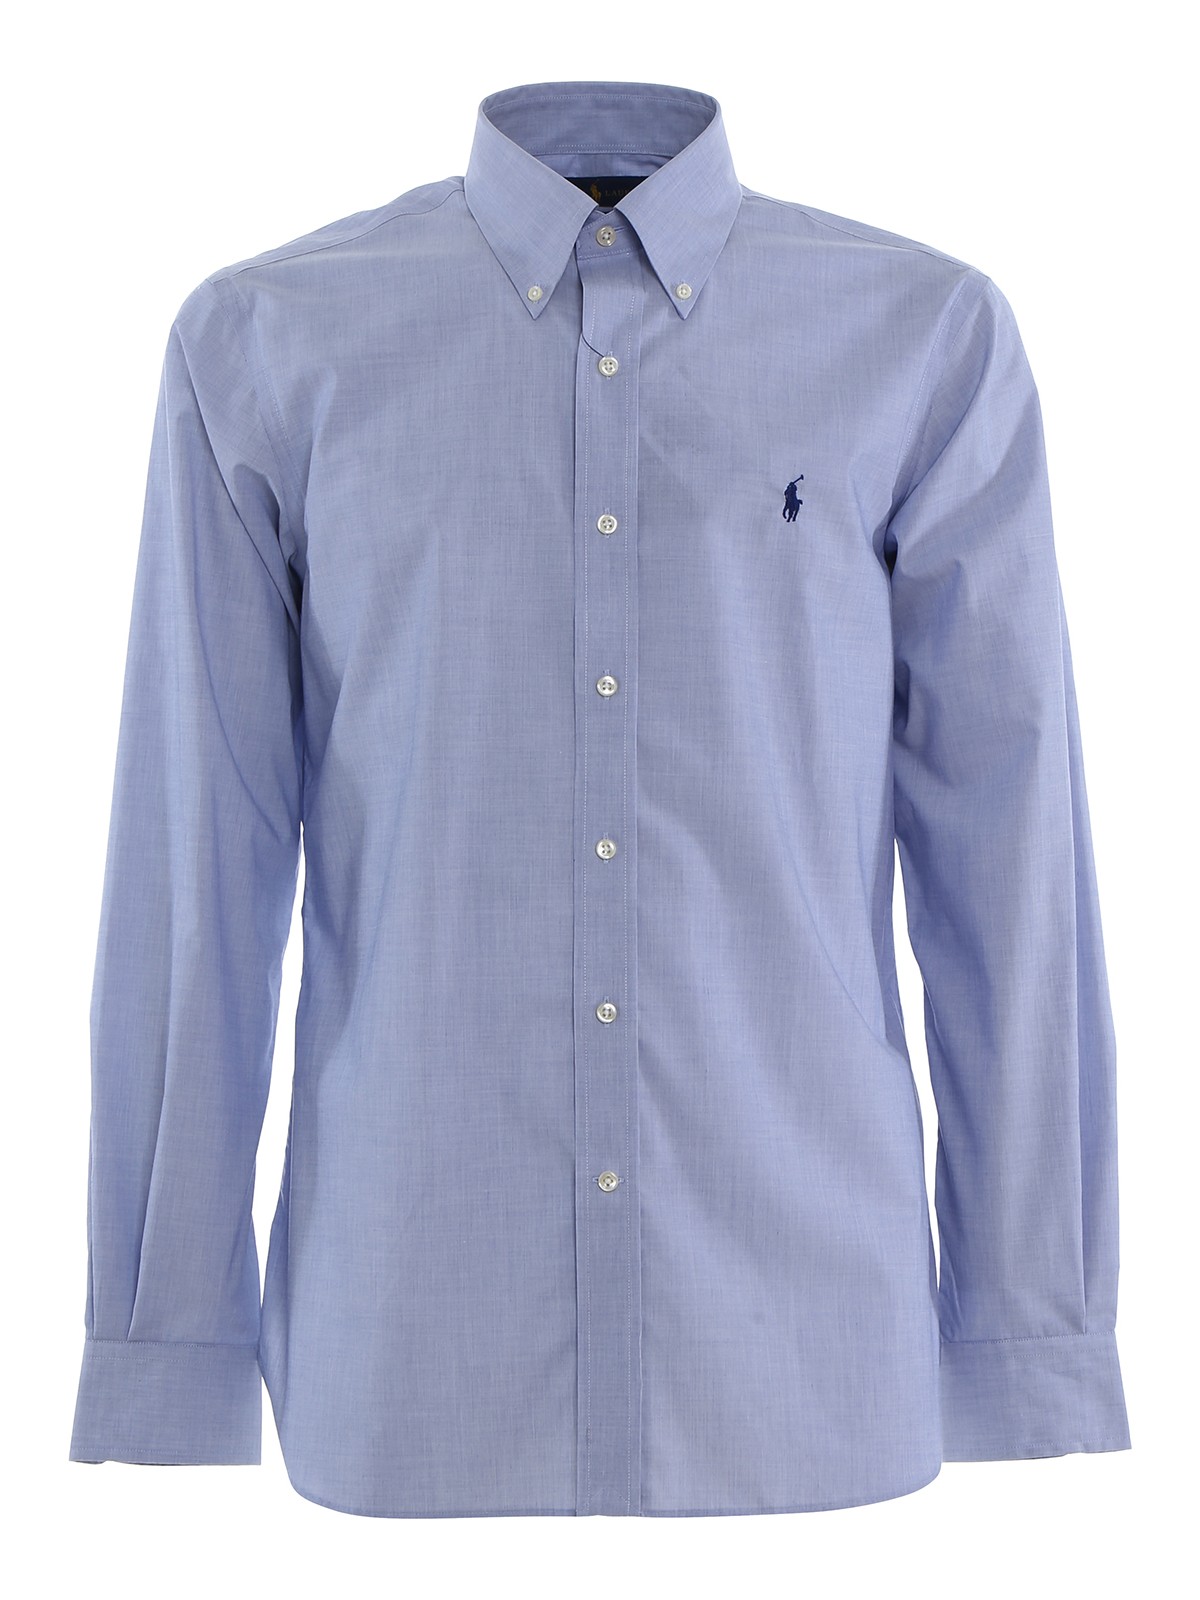 Polo Ralph Lauren - Cotton poplin shirt - shirts - 712824120004